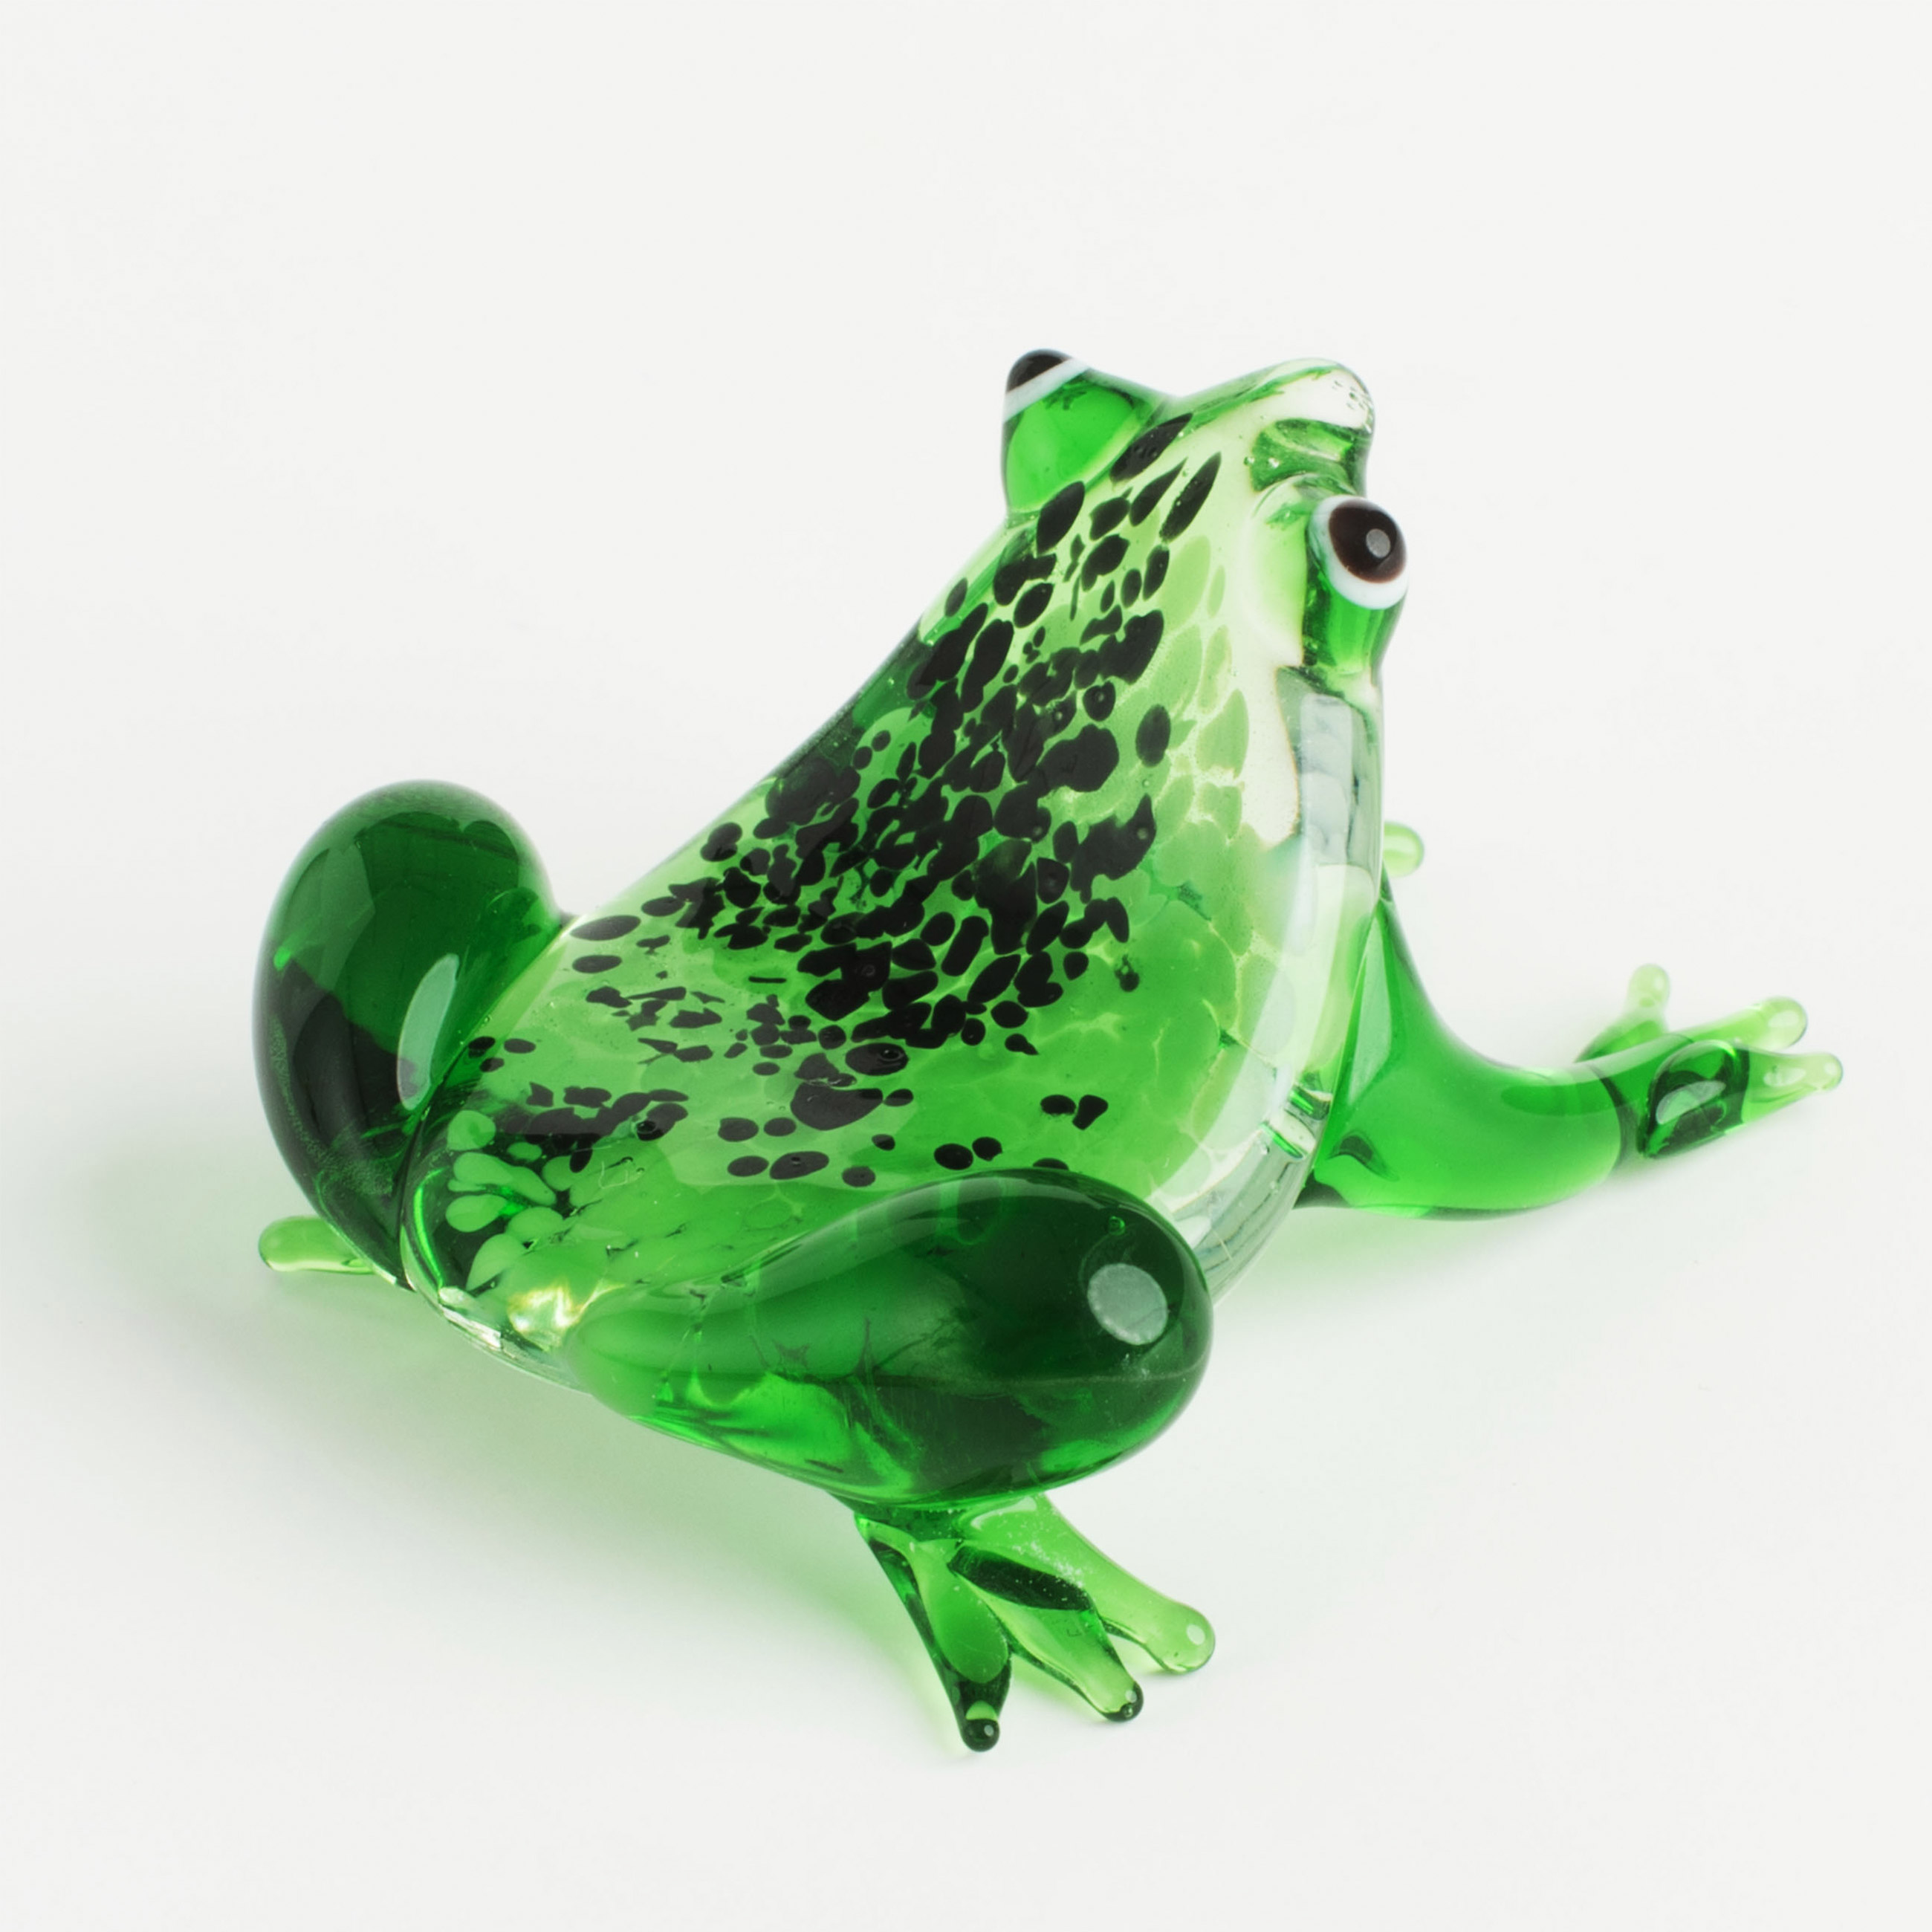 Statuette, 5 cm, glass, green, Frog, Vitreous изображение № 4